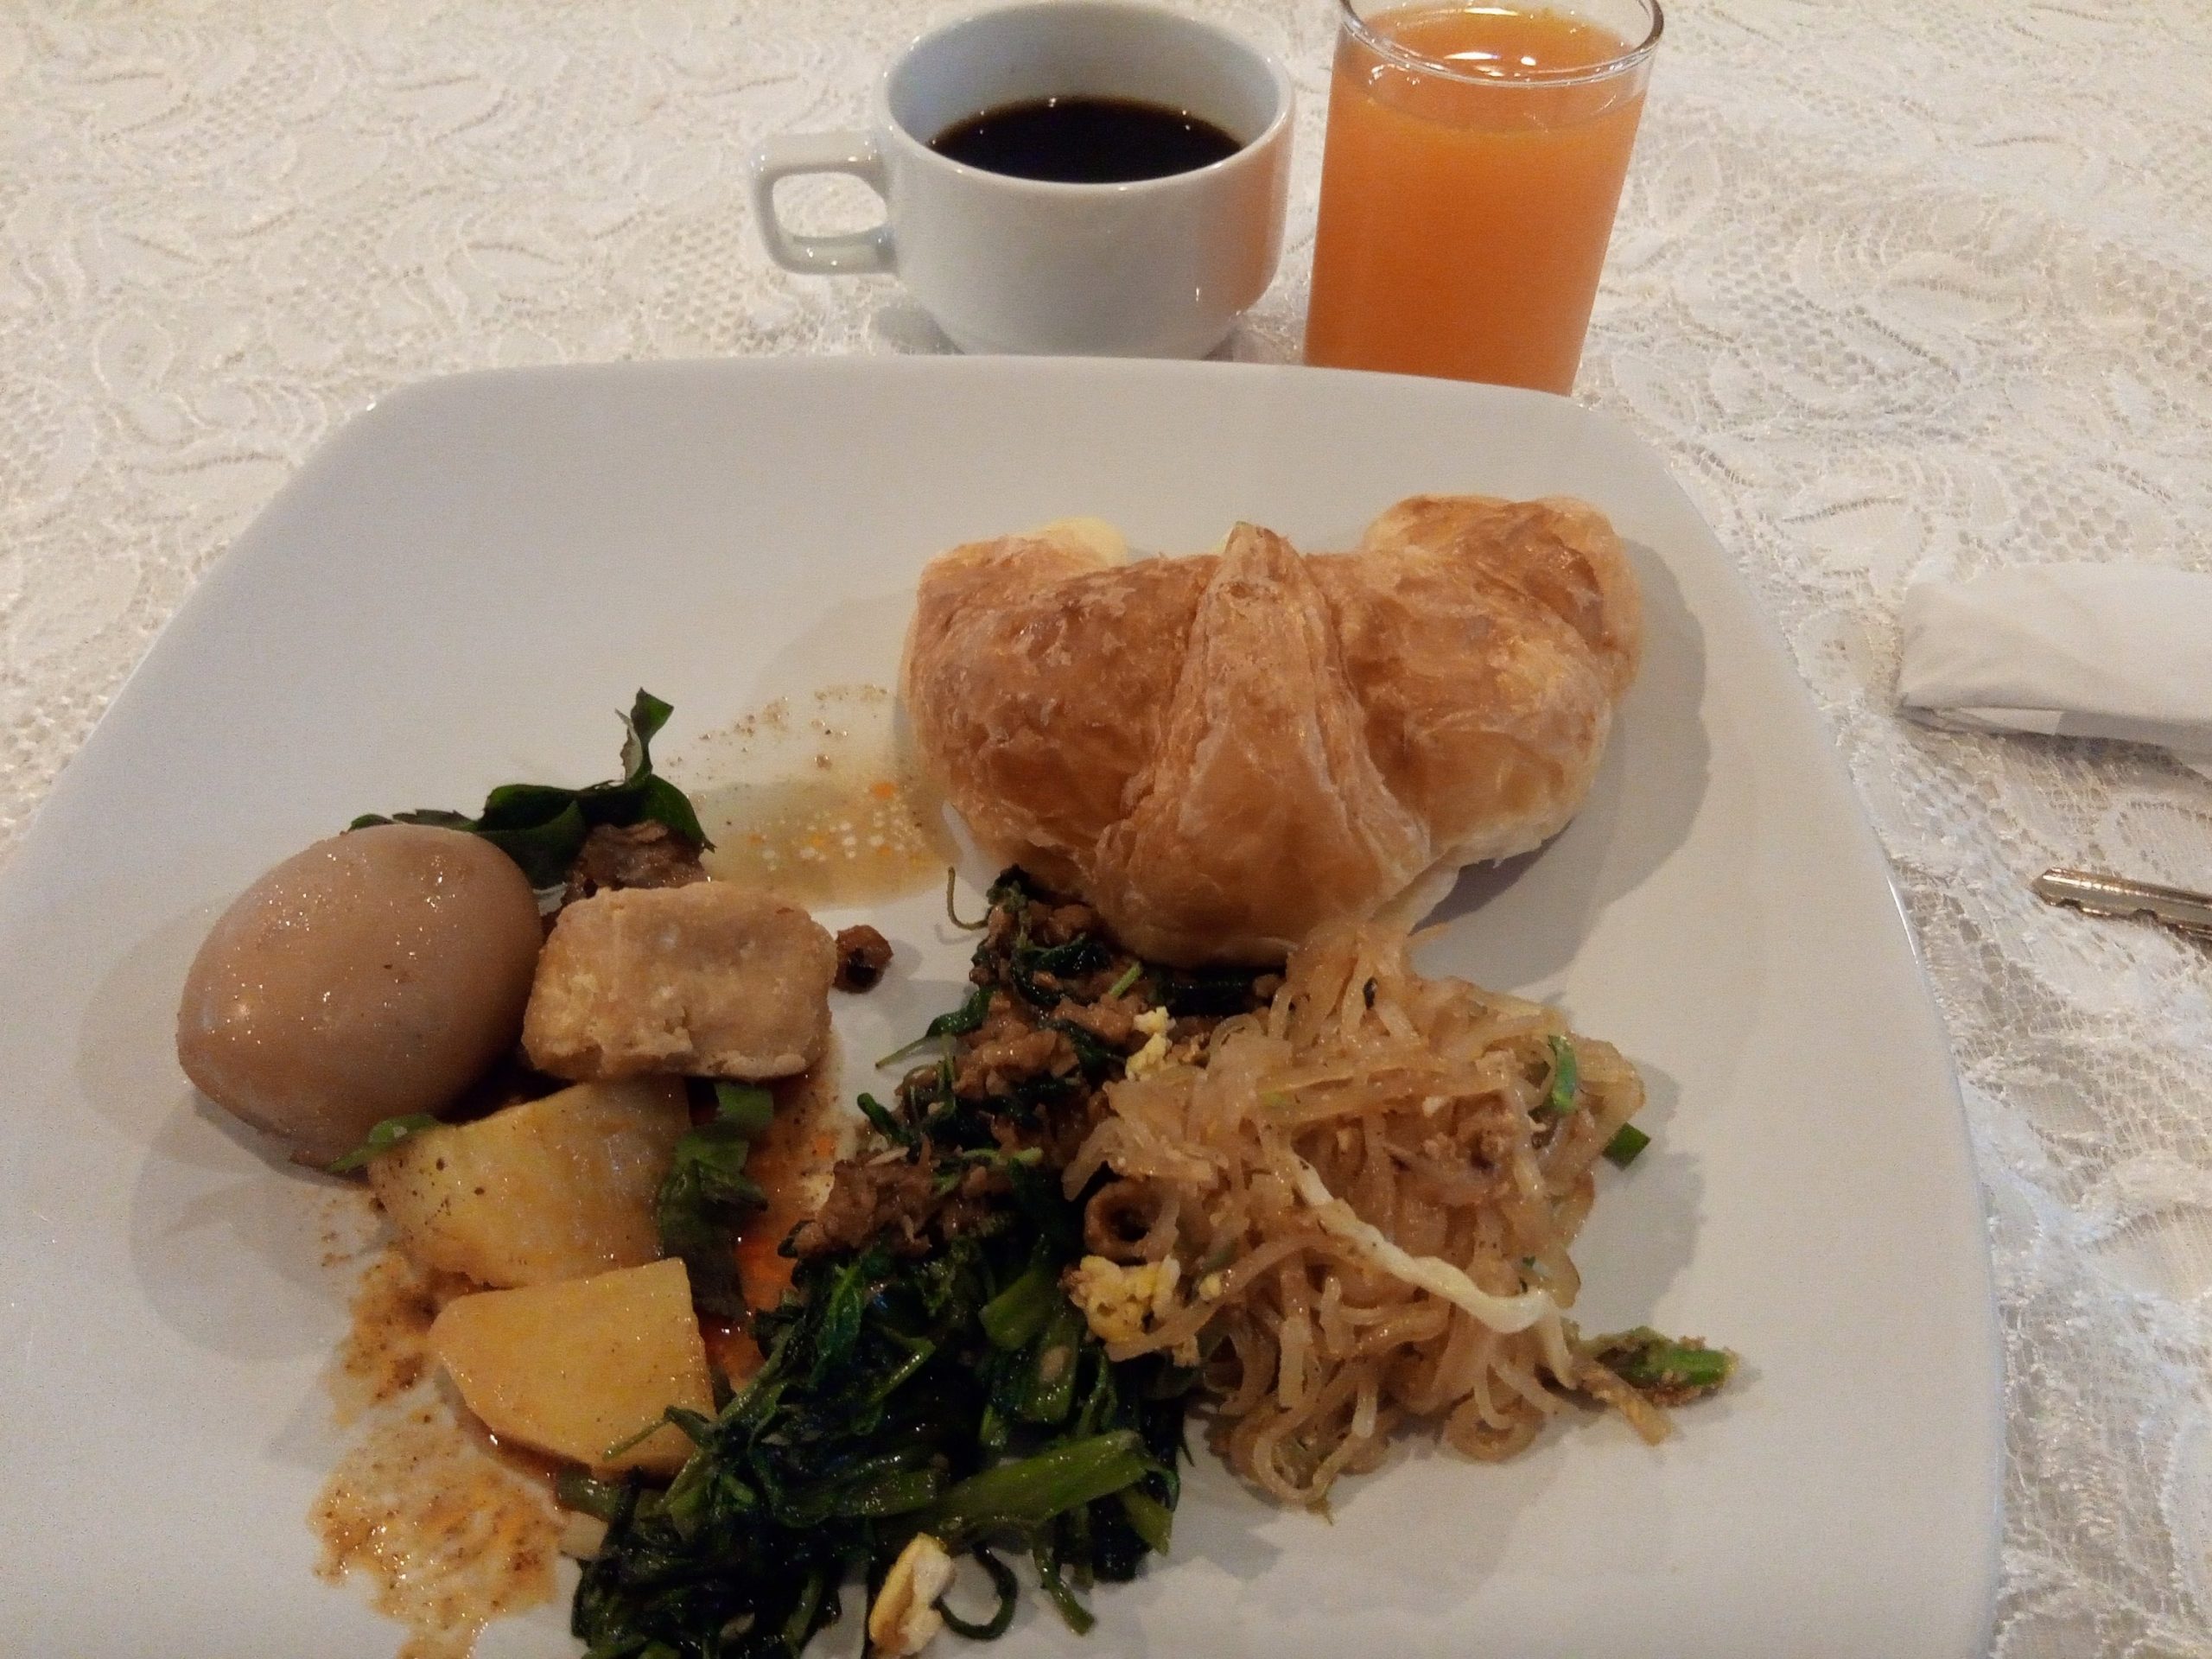 sukhothai garden breakfast スコータイガーデン食堂朝食